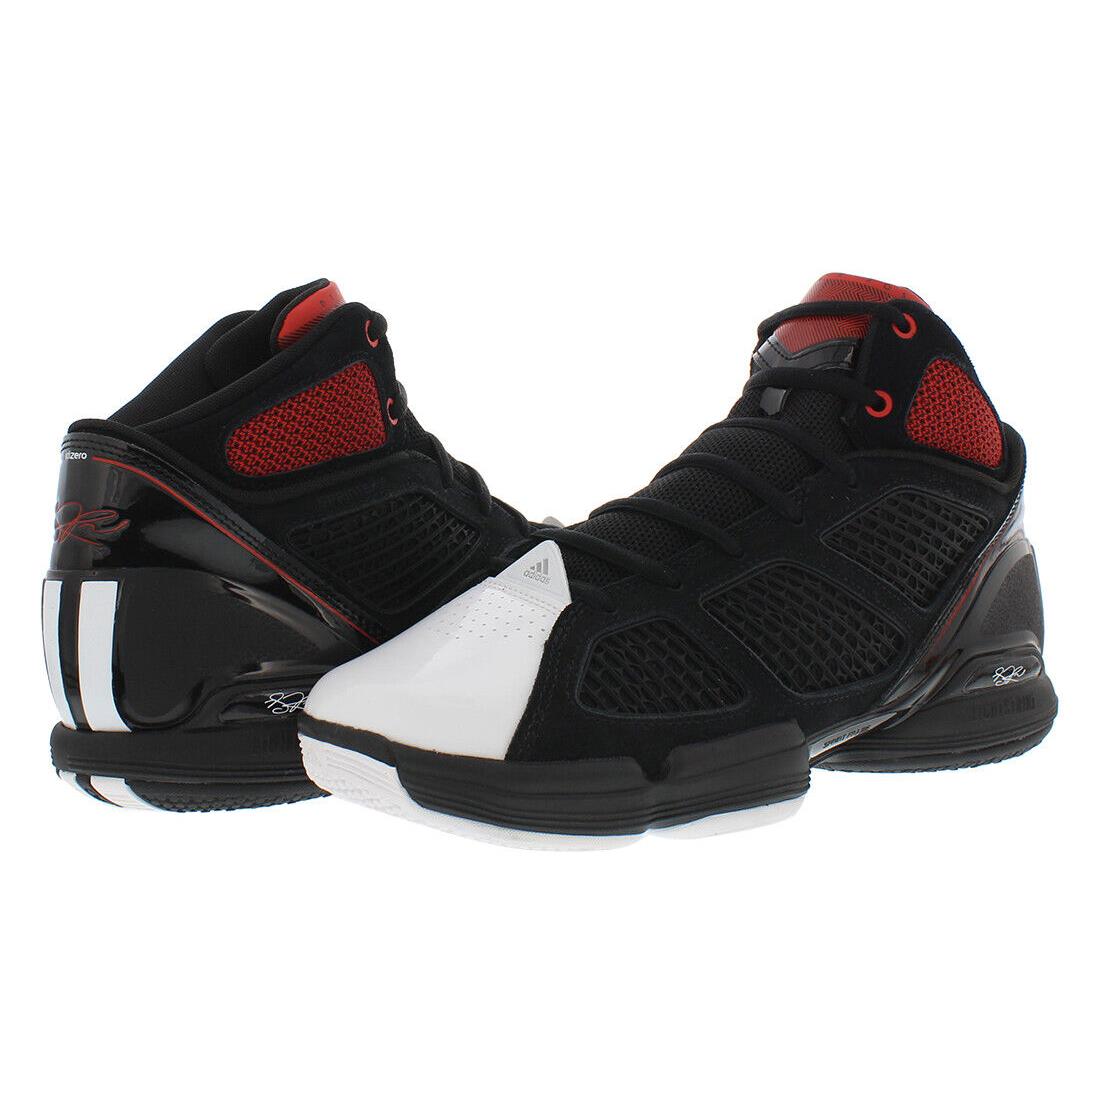 Adidas Adizero Rose 1.5 Restomod Mens Shoes - Black/Red, Main: Black